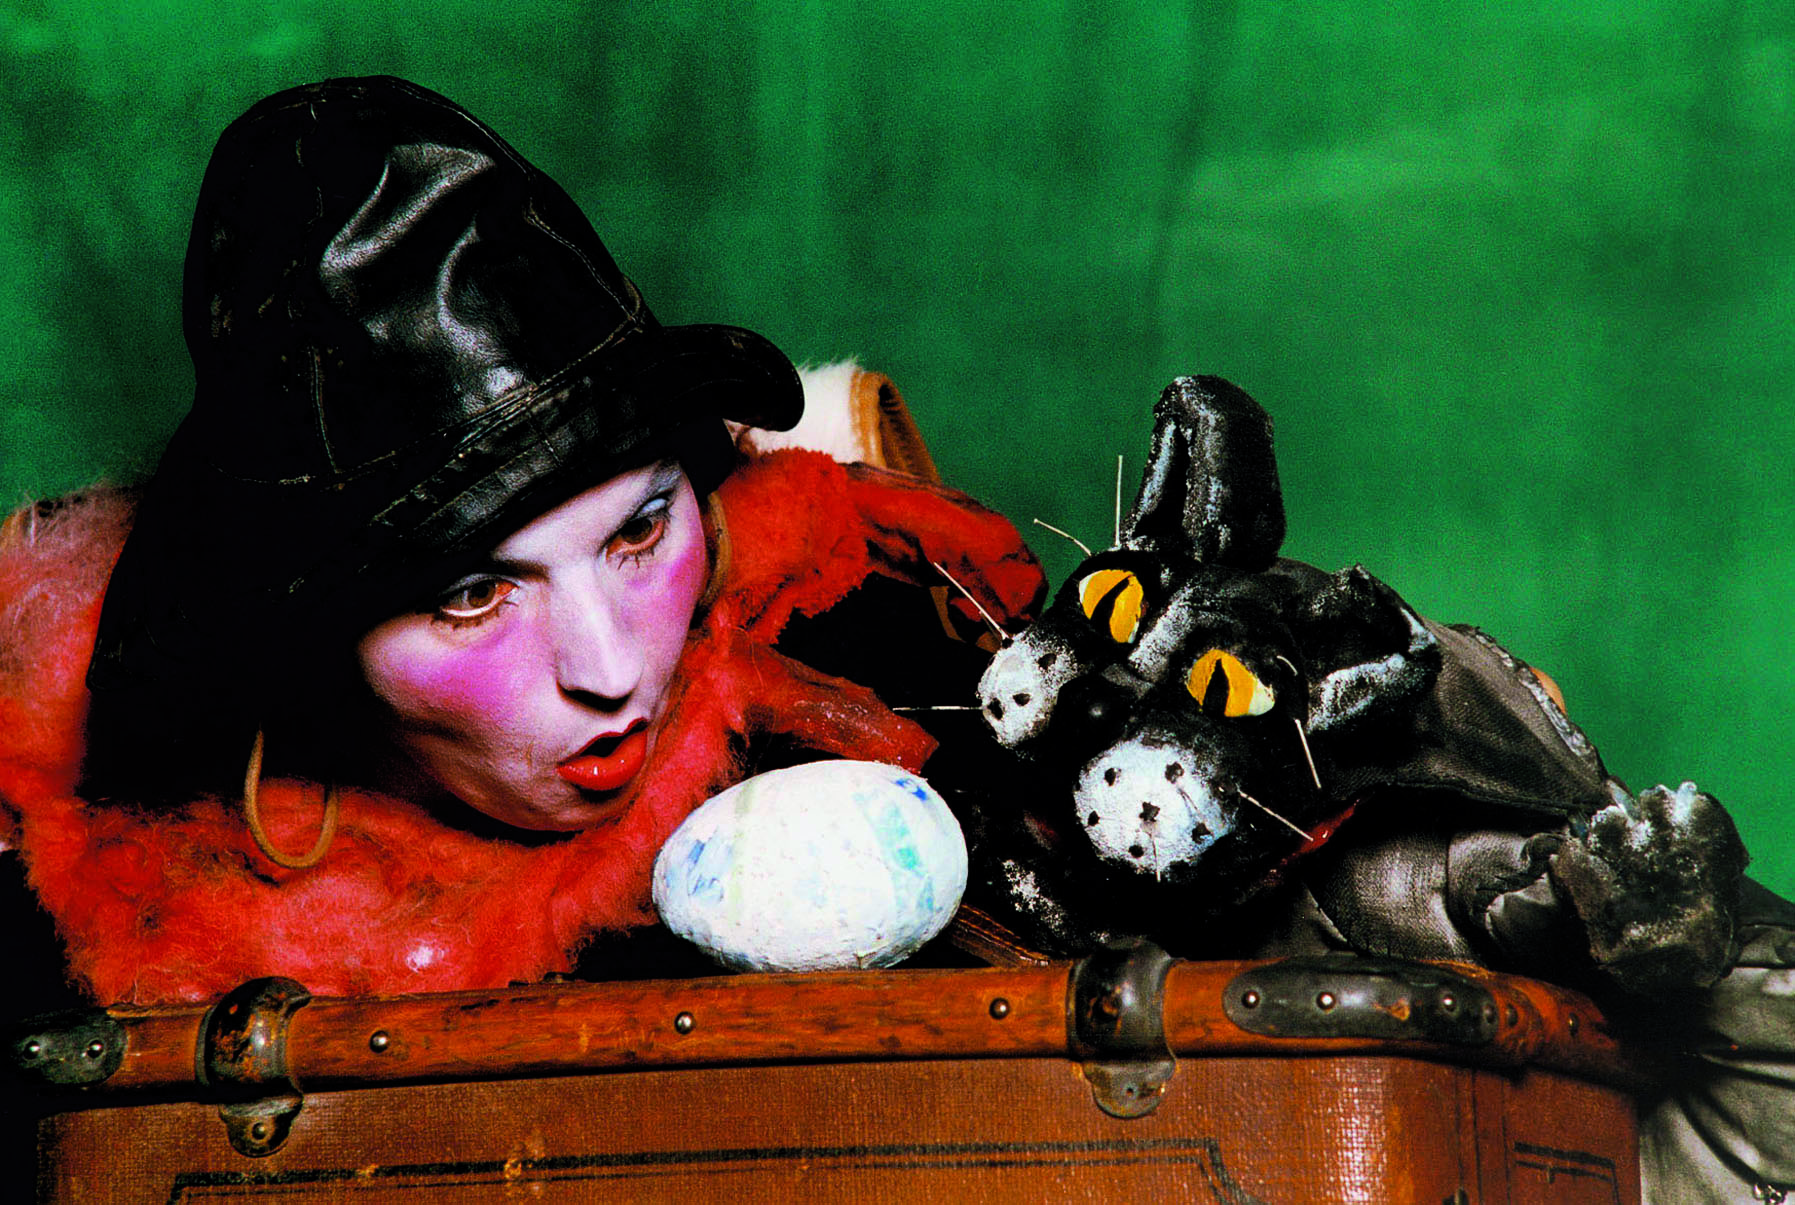 Foto: Puppenspiel “Der Kater Zorbas”. FotoaFoto: Puppenspiel “Der Kater Zorbas”. Fotoautor: Klaus Zinneckerutor: Klaus Zinnecker